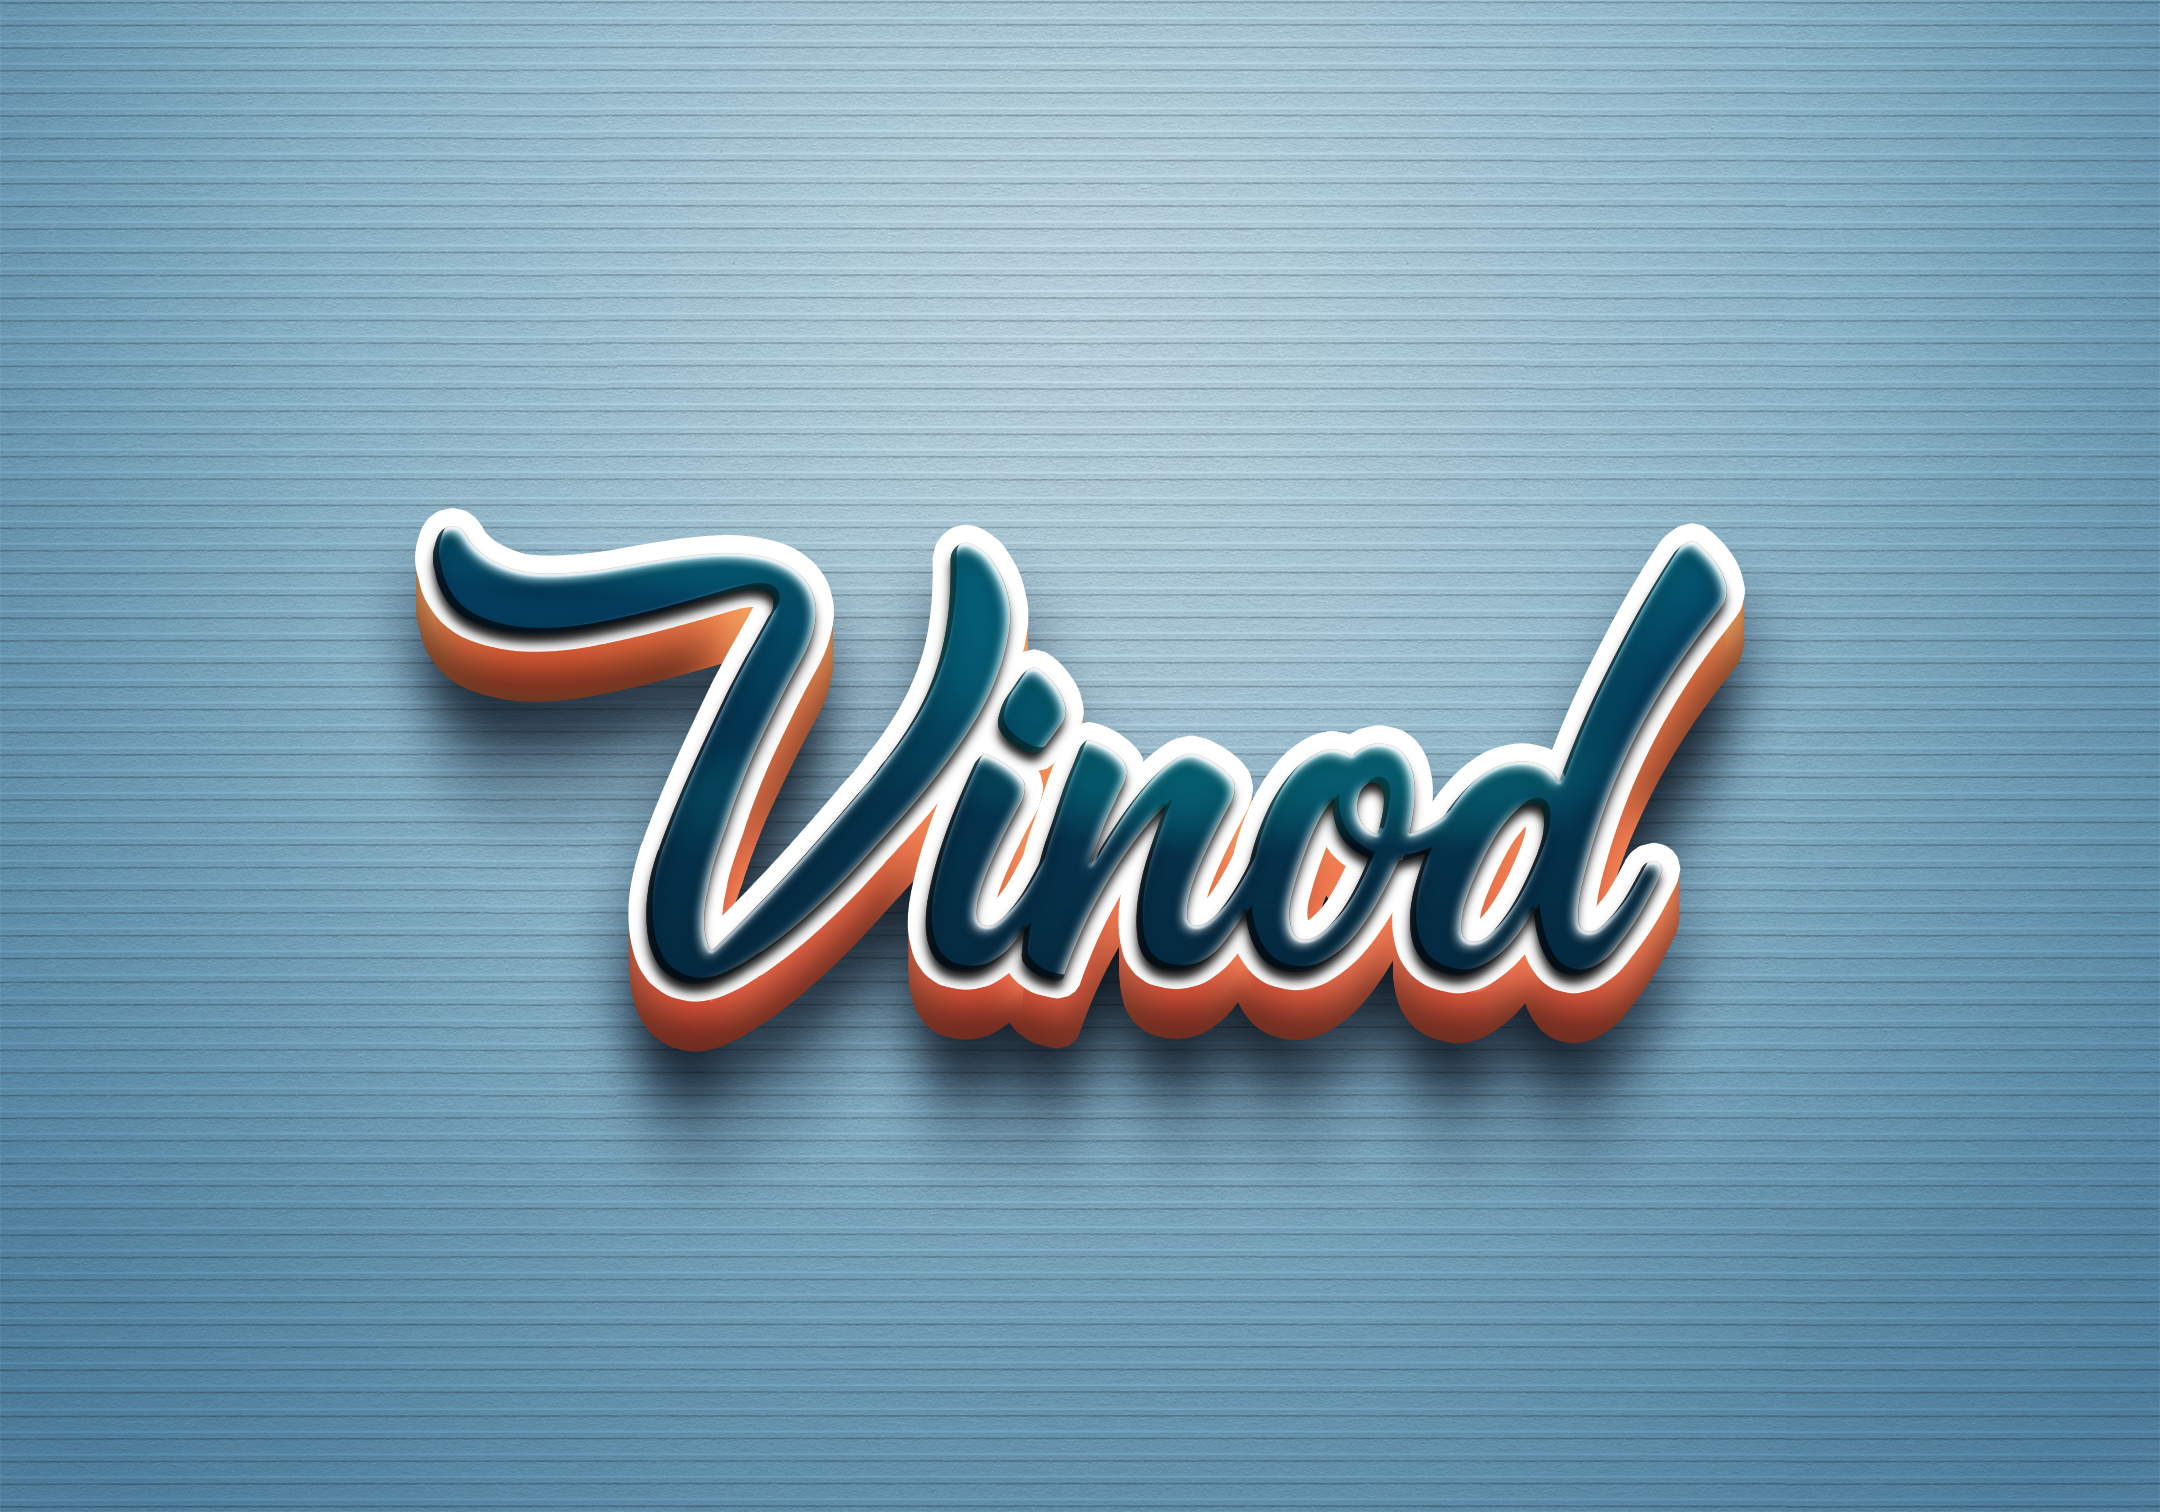 Vinod Products - Jhattse